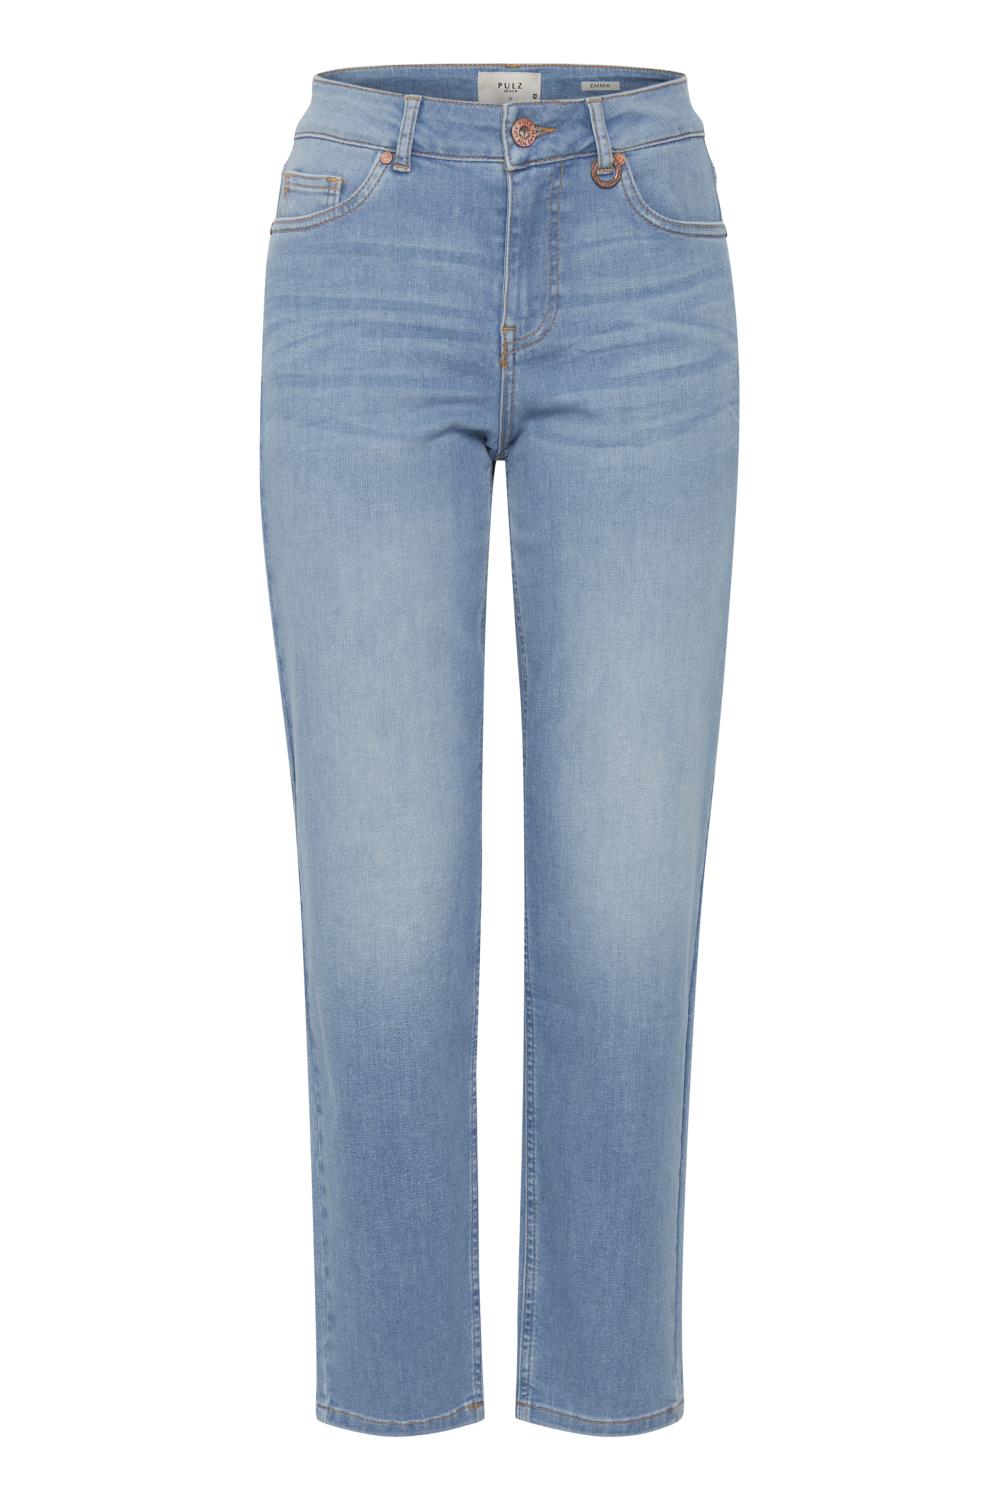 Pulz Emma Jeans Regular, lys denim blå